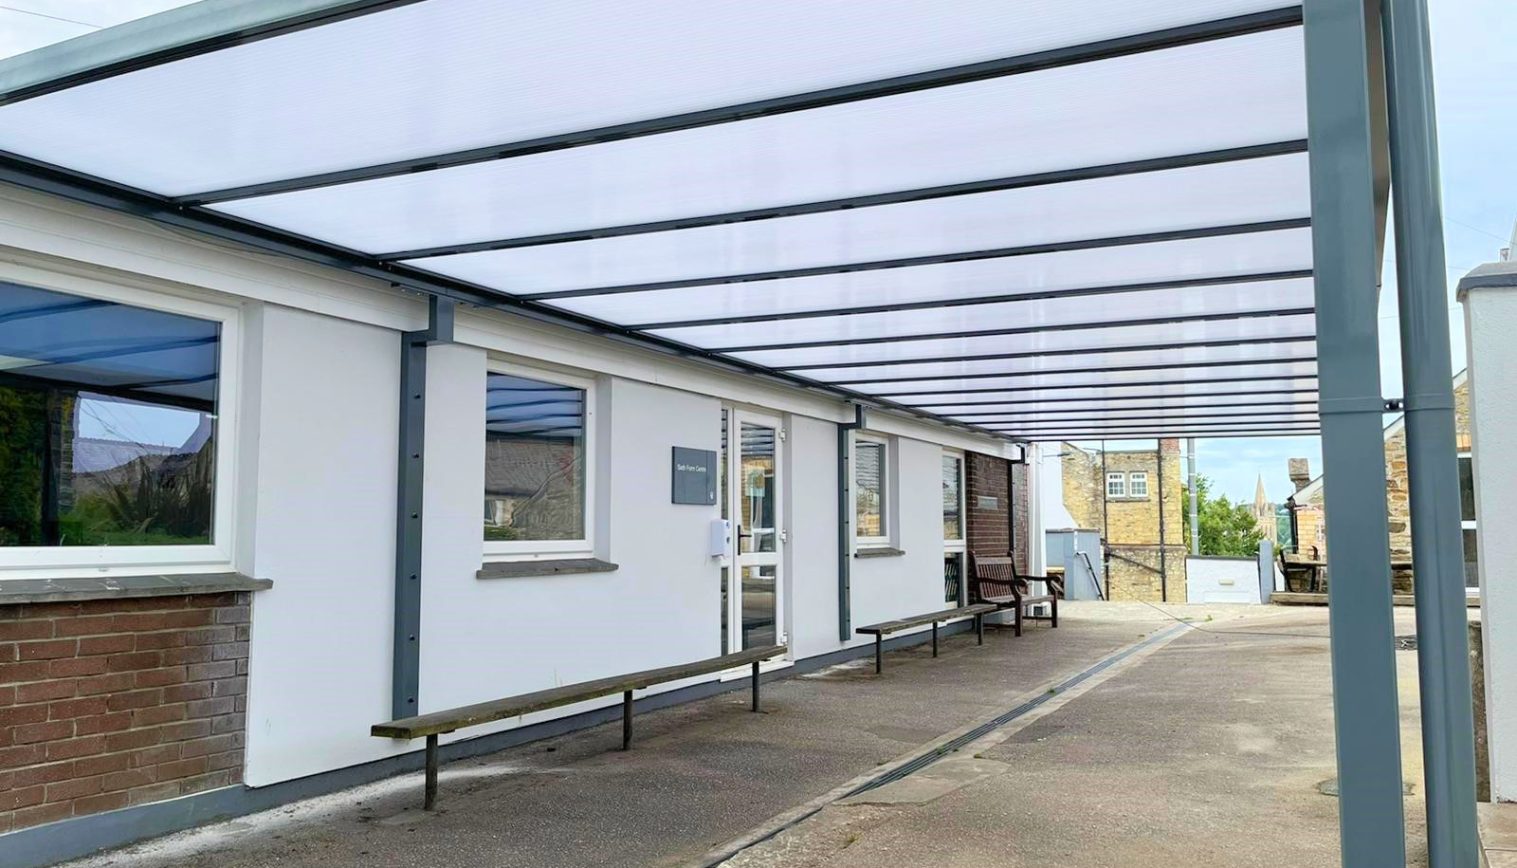 Truro School – Free Standing Canopies